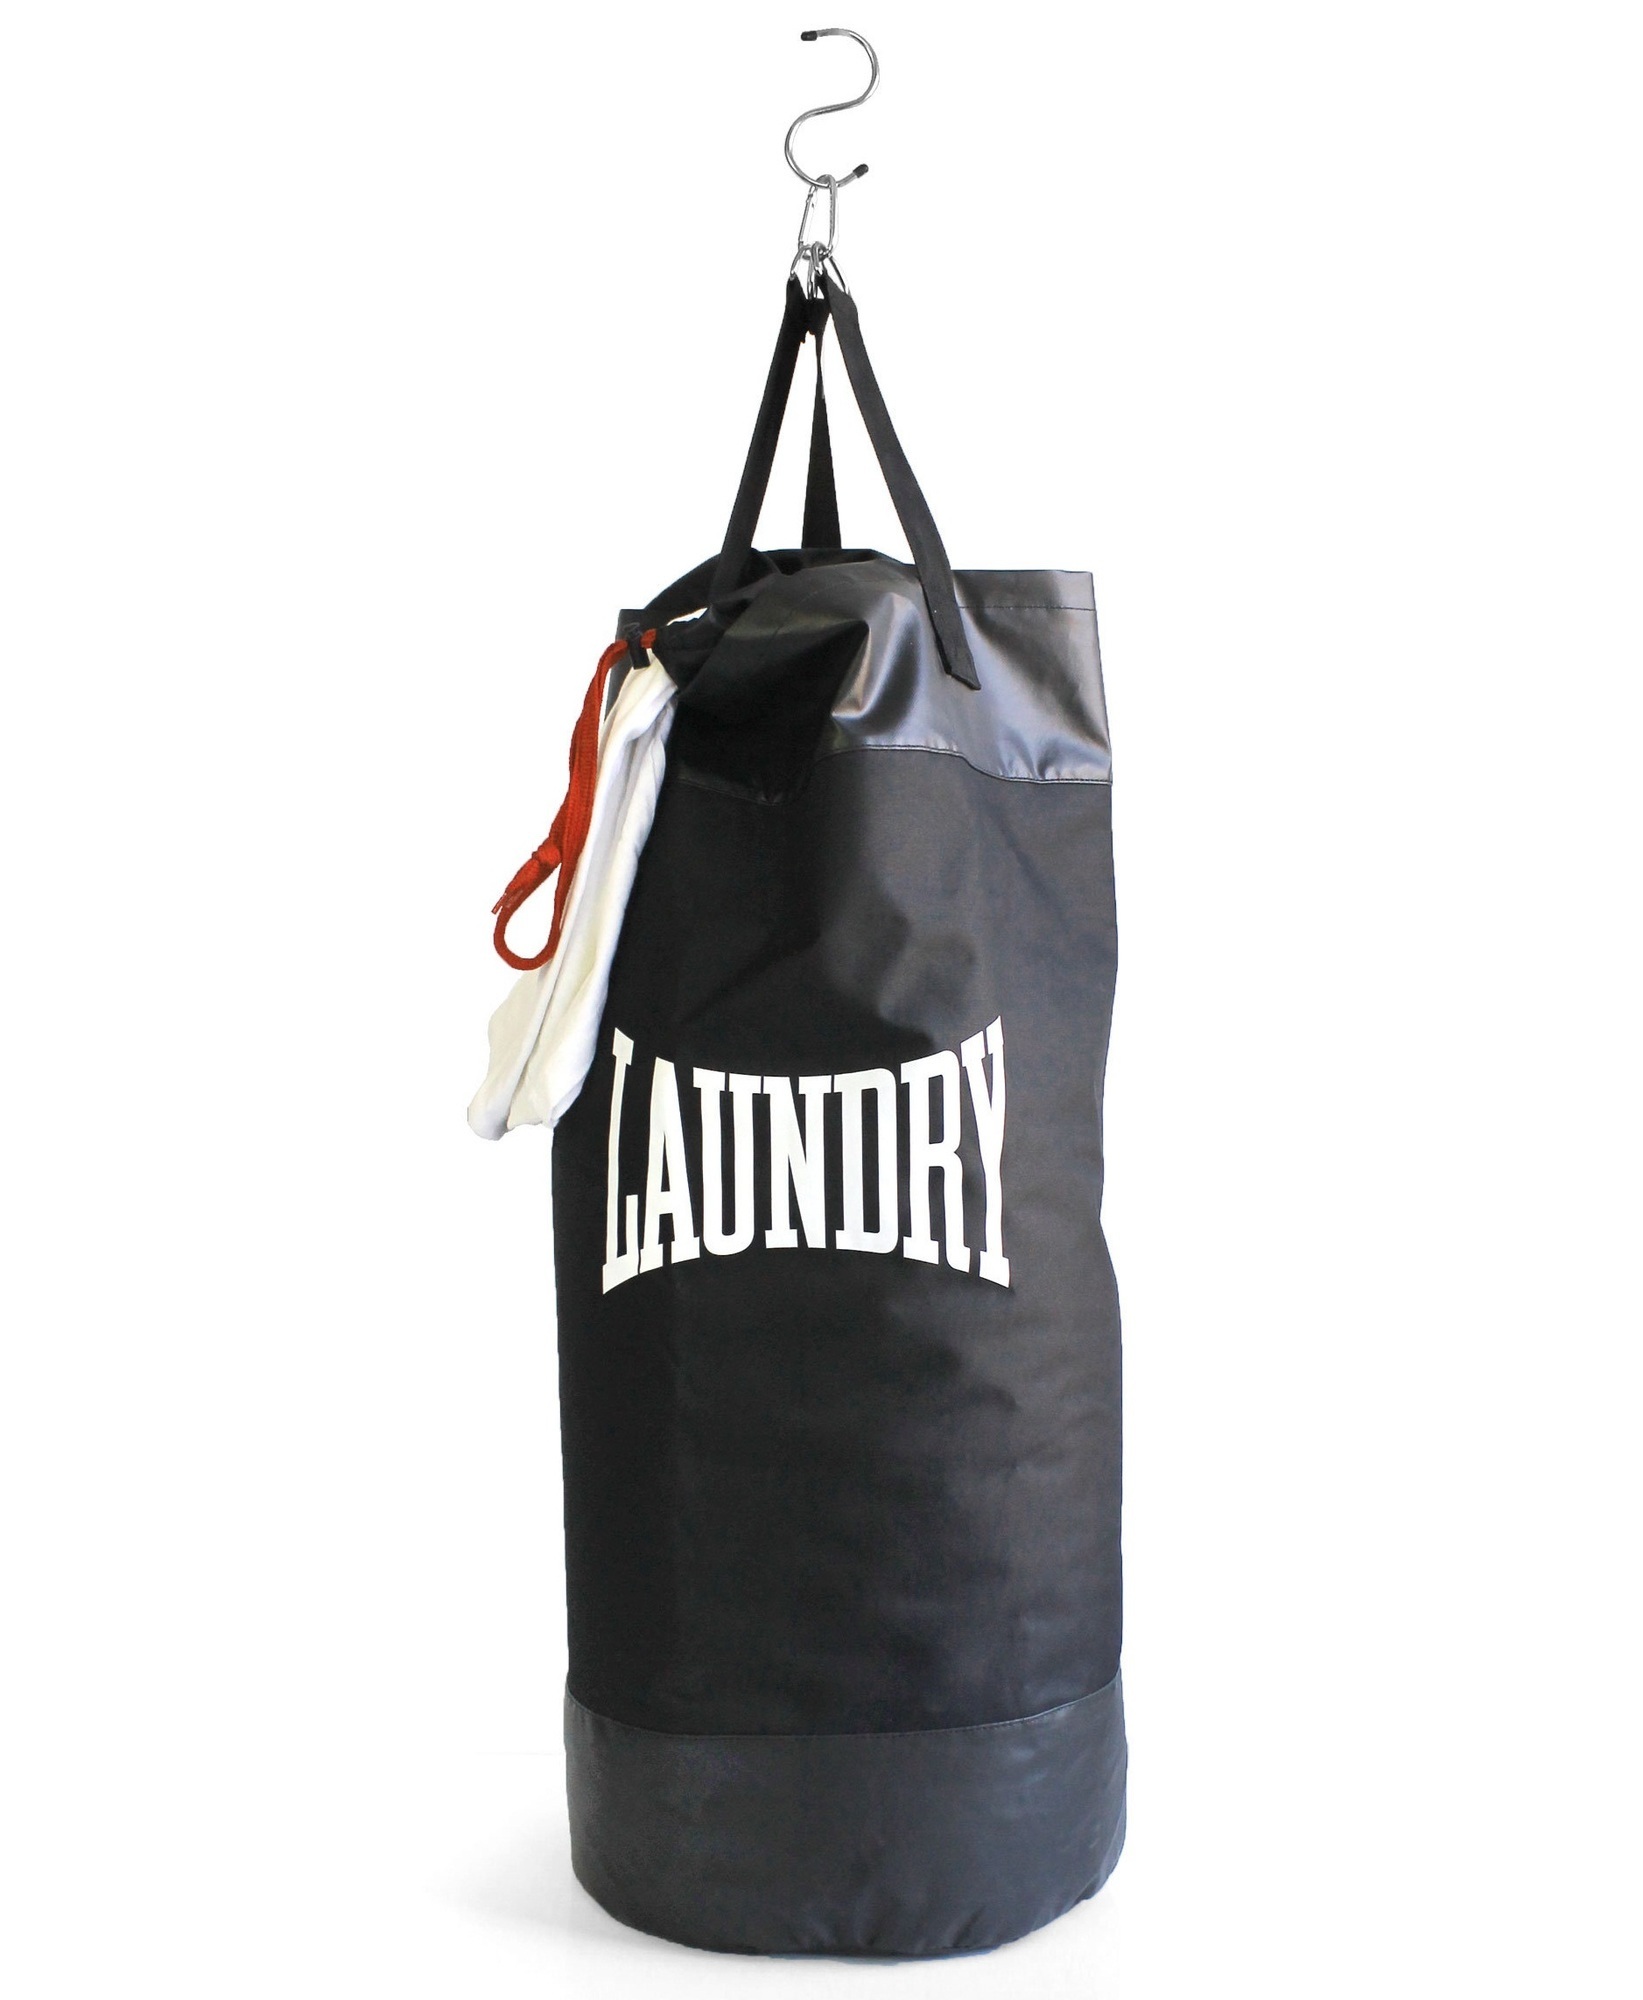 Punch bag laundry bag